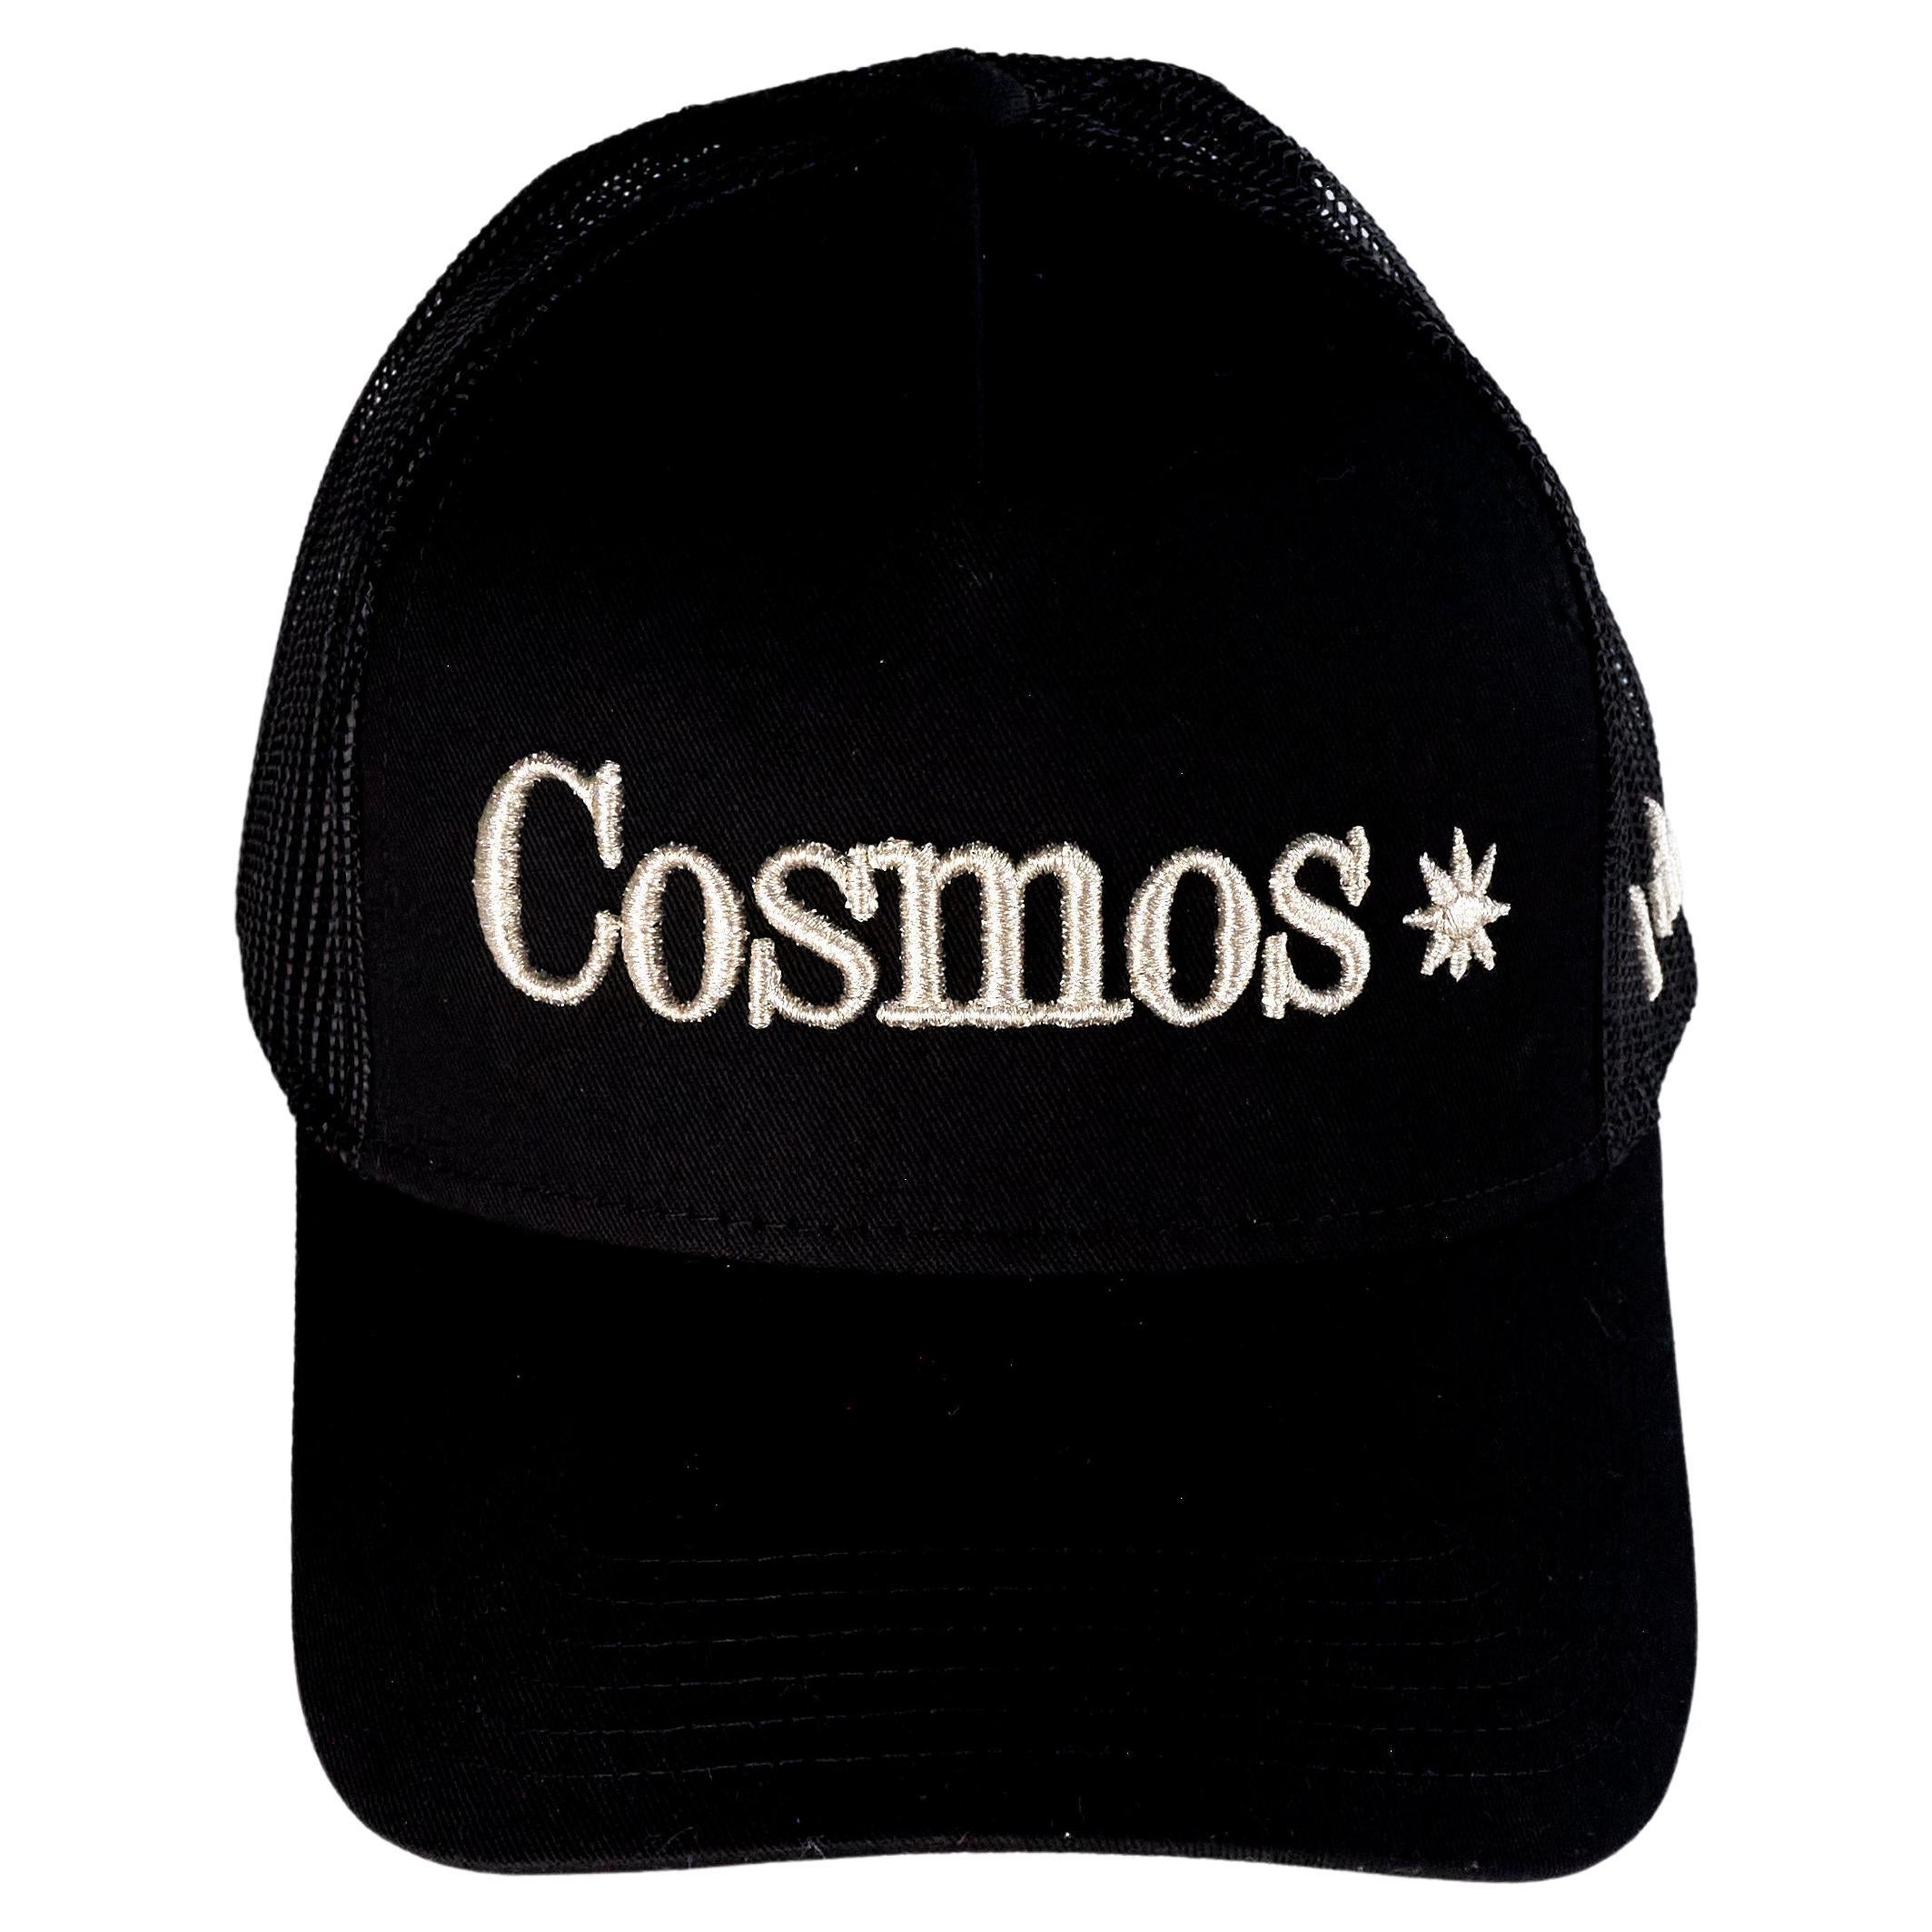 Women's Trucker Hat Black Cosmos Silver Lurex Embroidery J Dauphin